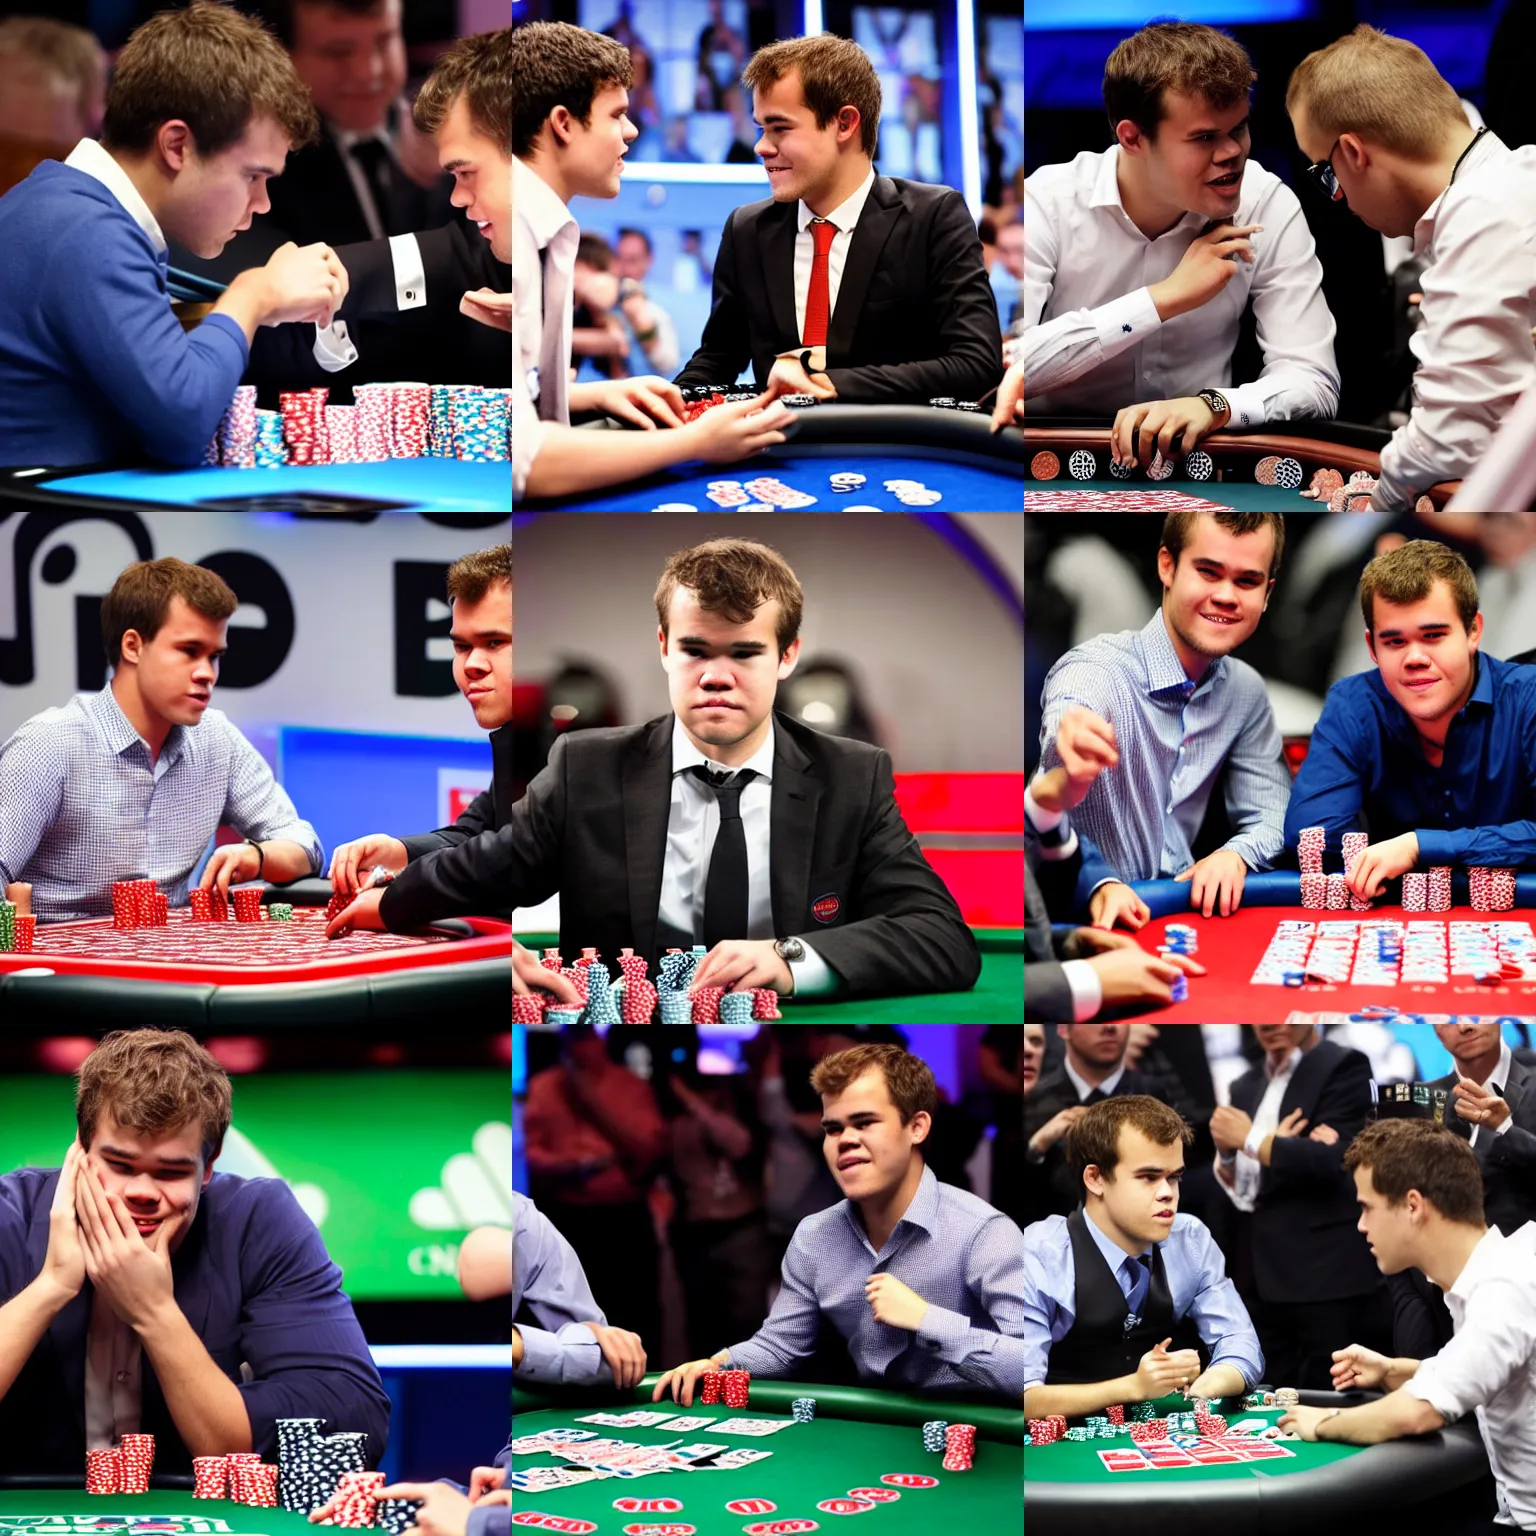 Prompt: Magnus Carlsen winning the World Series of Poker CNN report